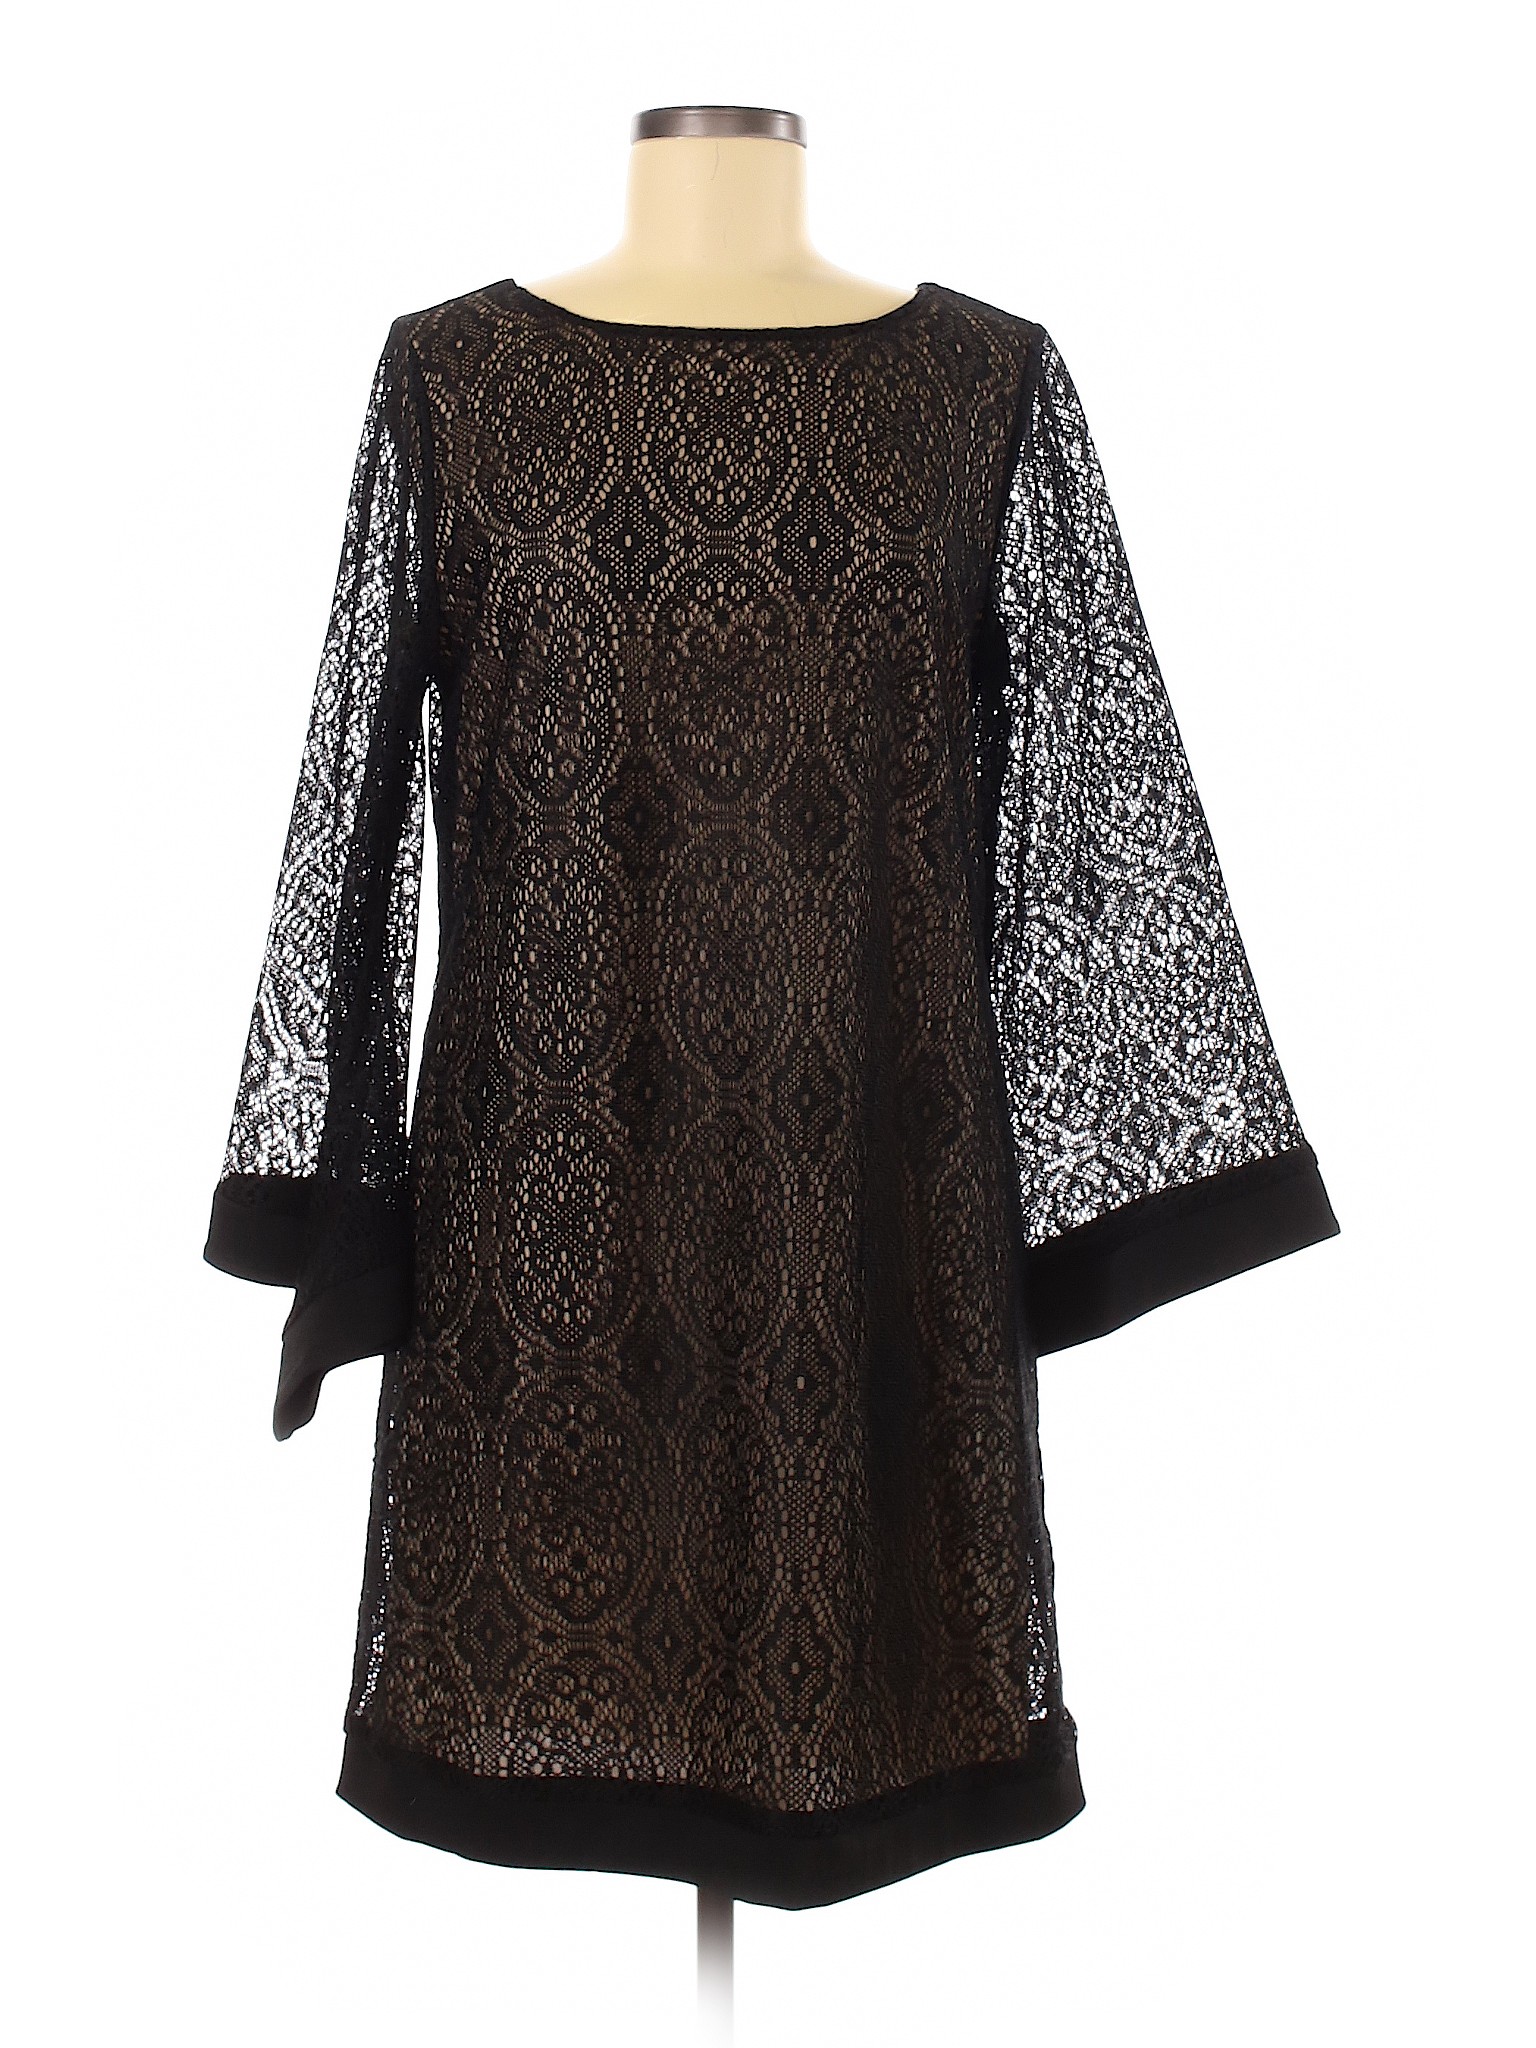 Tacera Women Black Casual Dress M | eBay